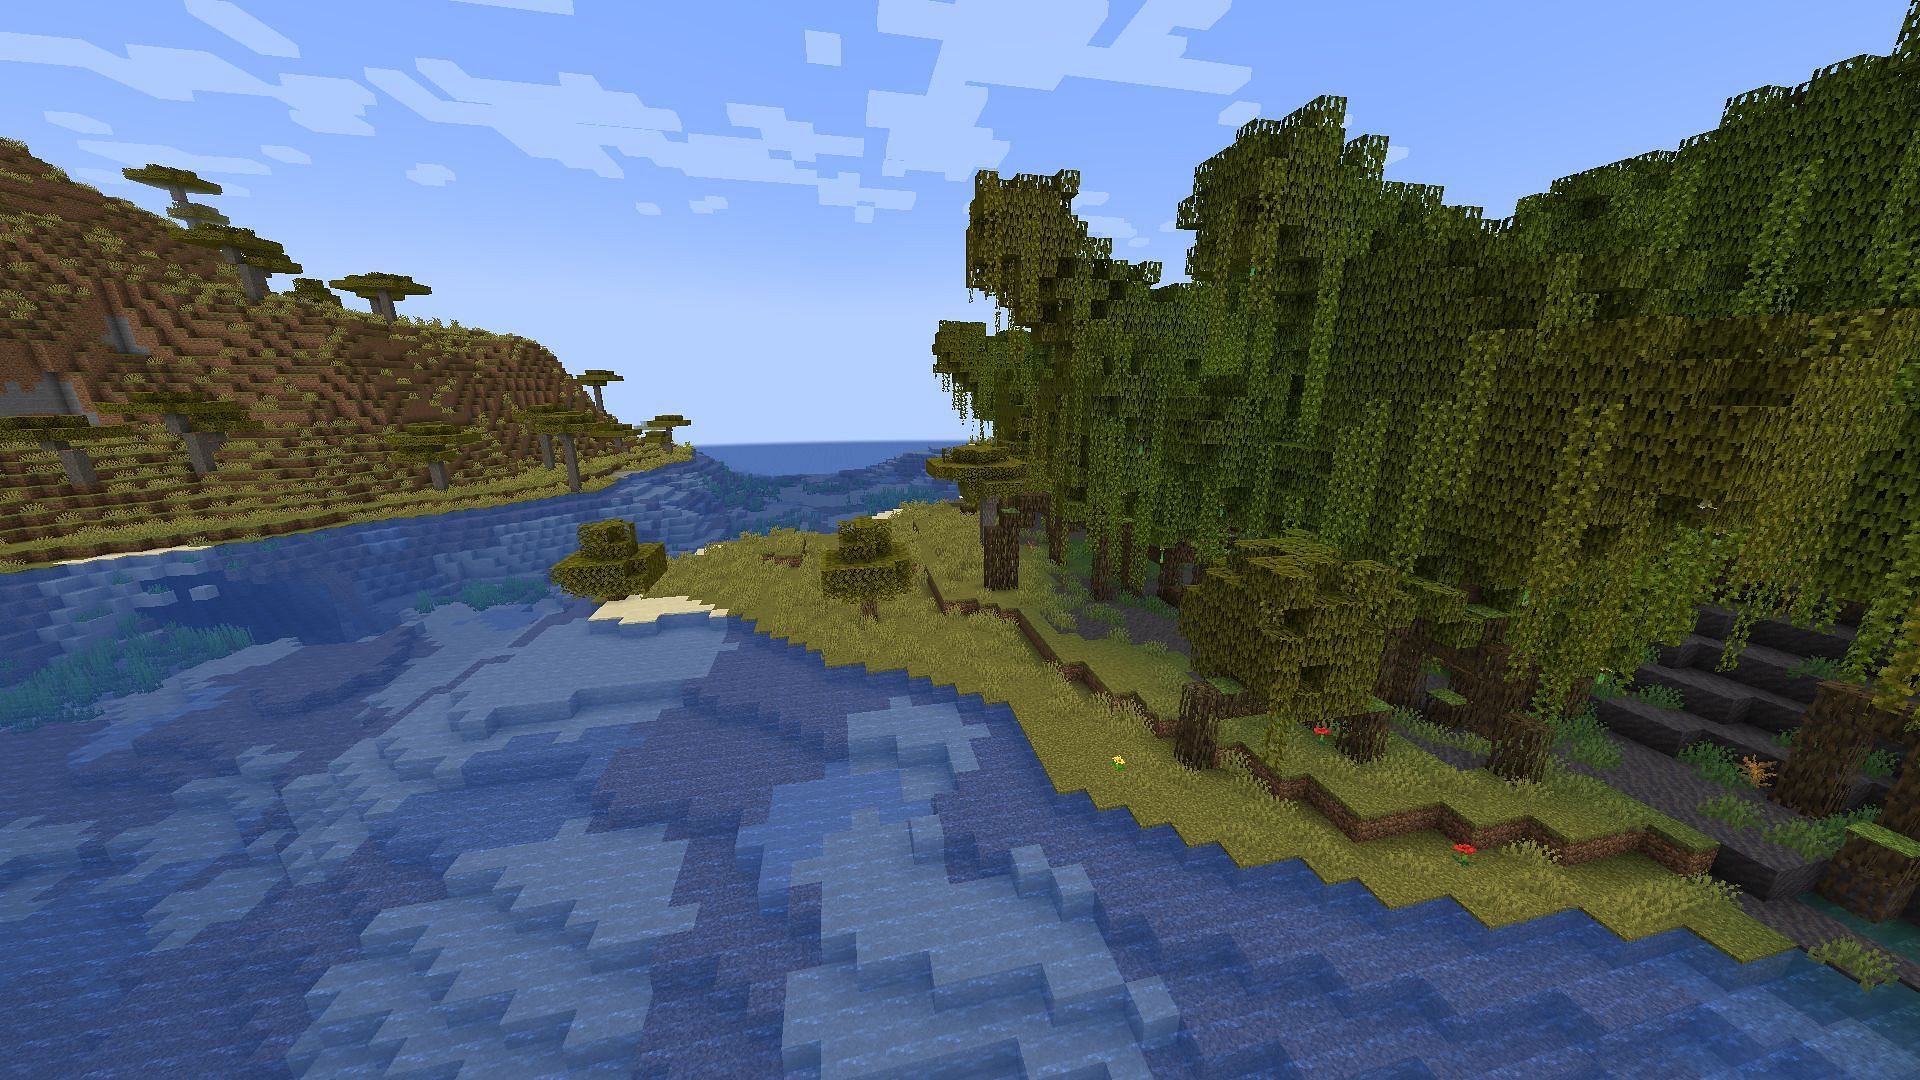 Small mangrove swamp area near the Savanna biome and mountain in Minecraft (Image via Mojang)